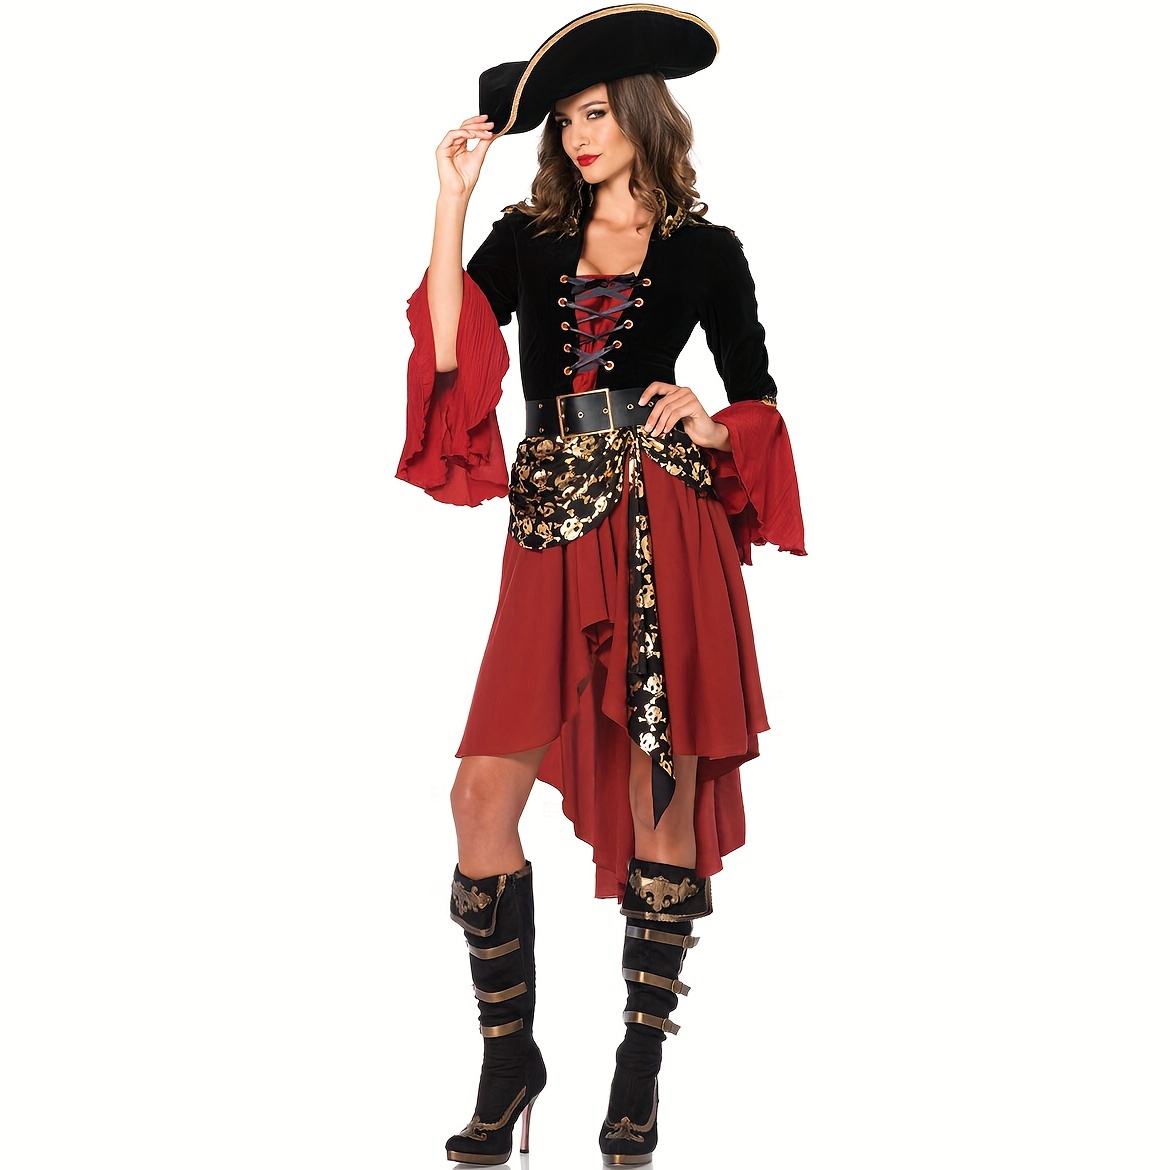 Sombrero De Pirata Negro Para Halloween, Gorro Con Estampado De Calavera,  Disfraz De Capitán, Juego De Rol, Mascarada, Accesorios De Fiesta De Cosplay